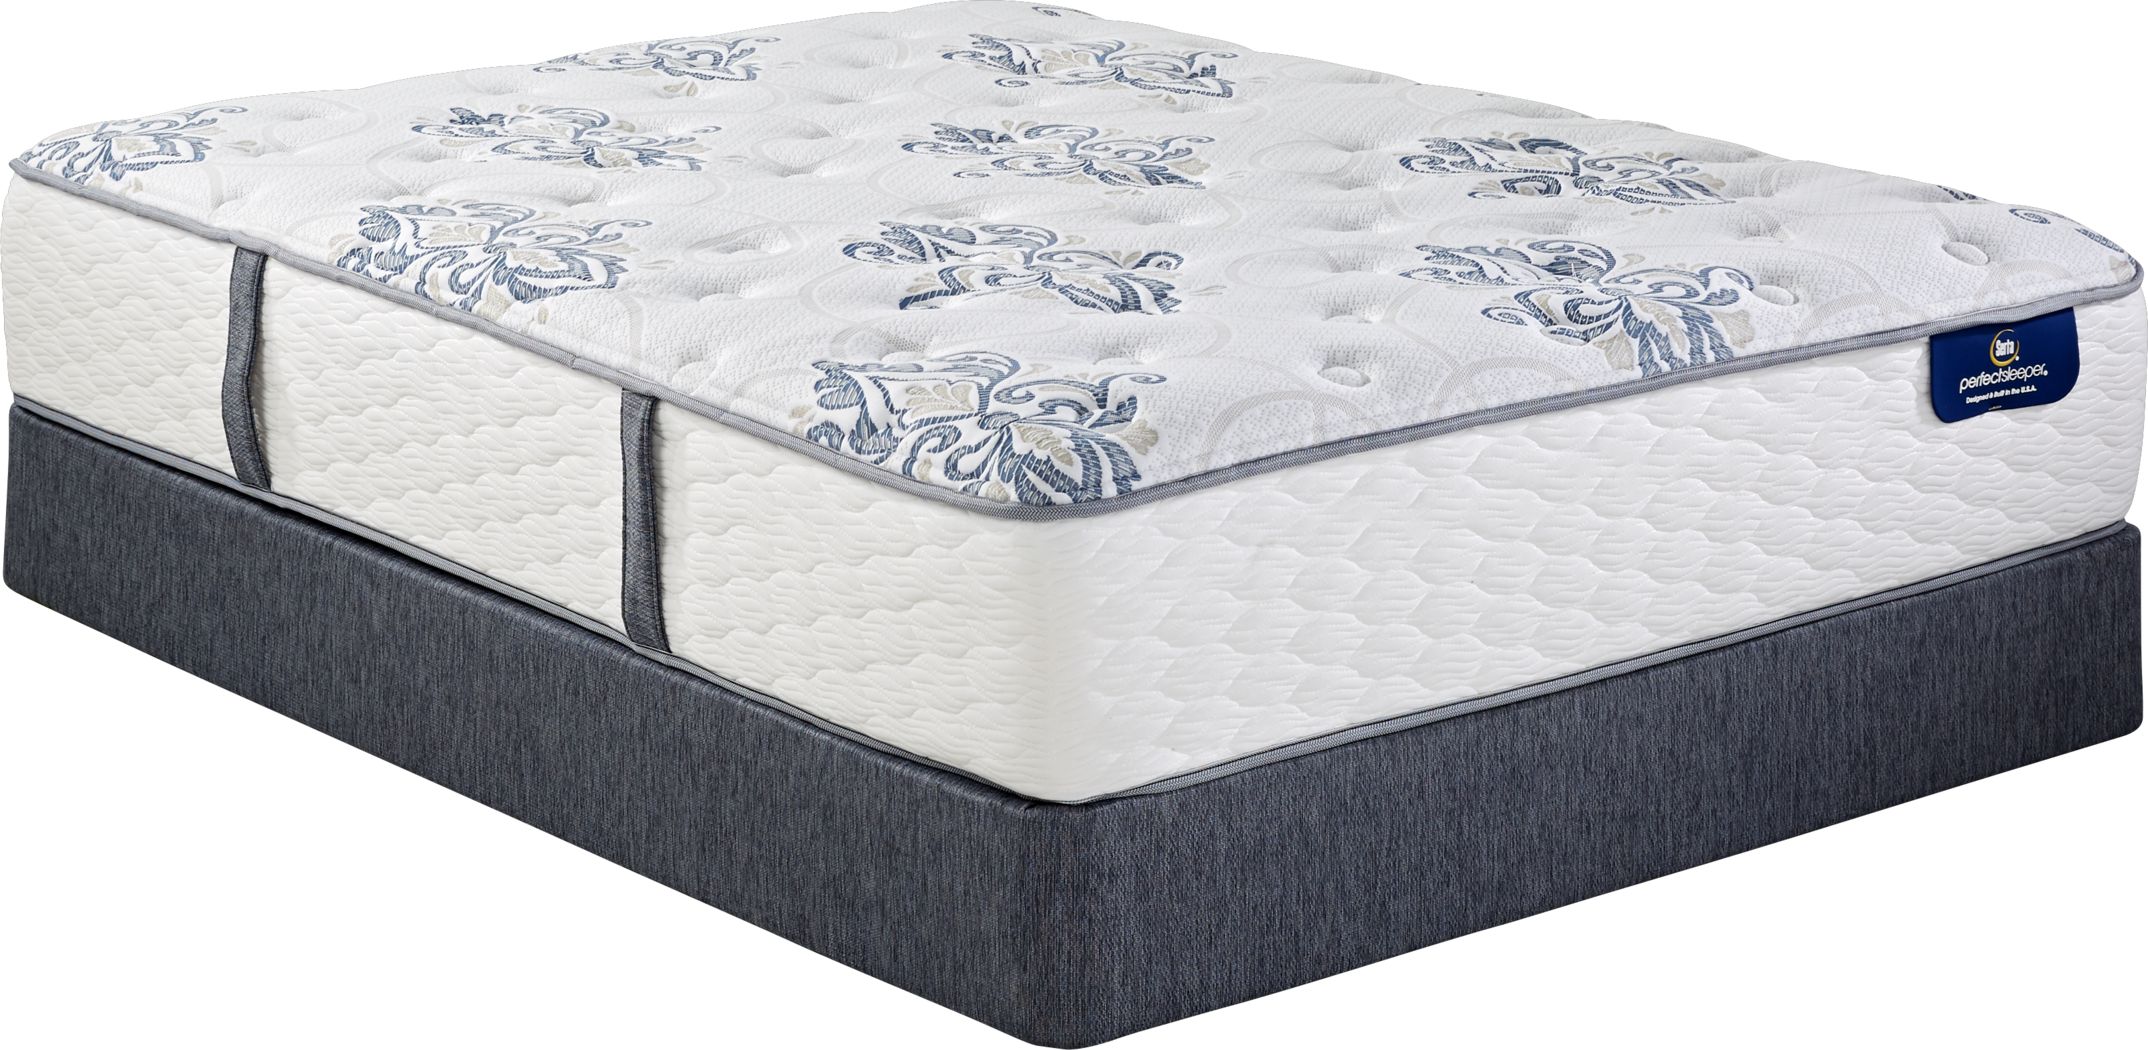 serta perfect sleeper elite margaux mattress